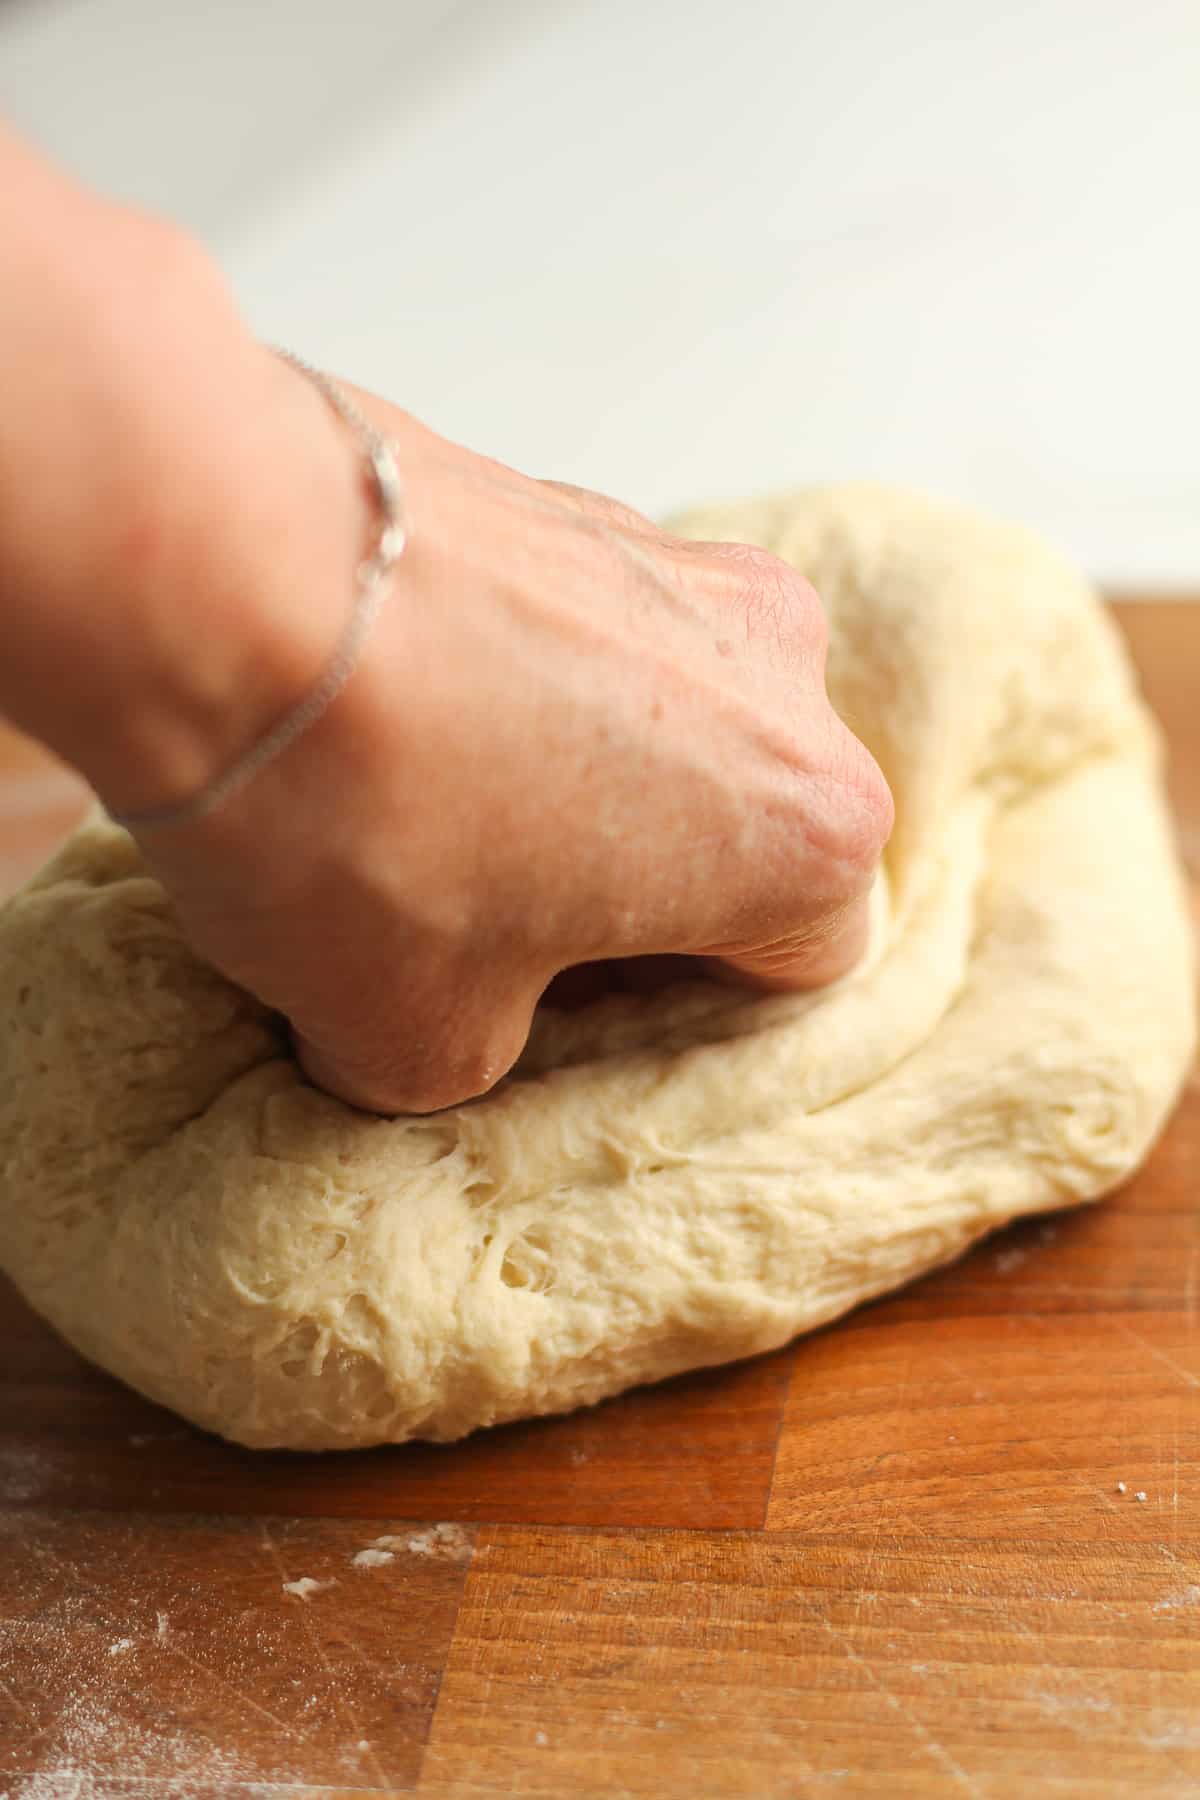 My hand kneeling the flatbread.